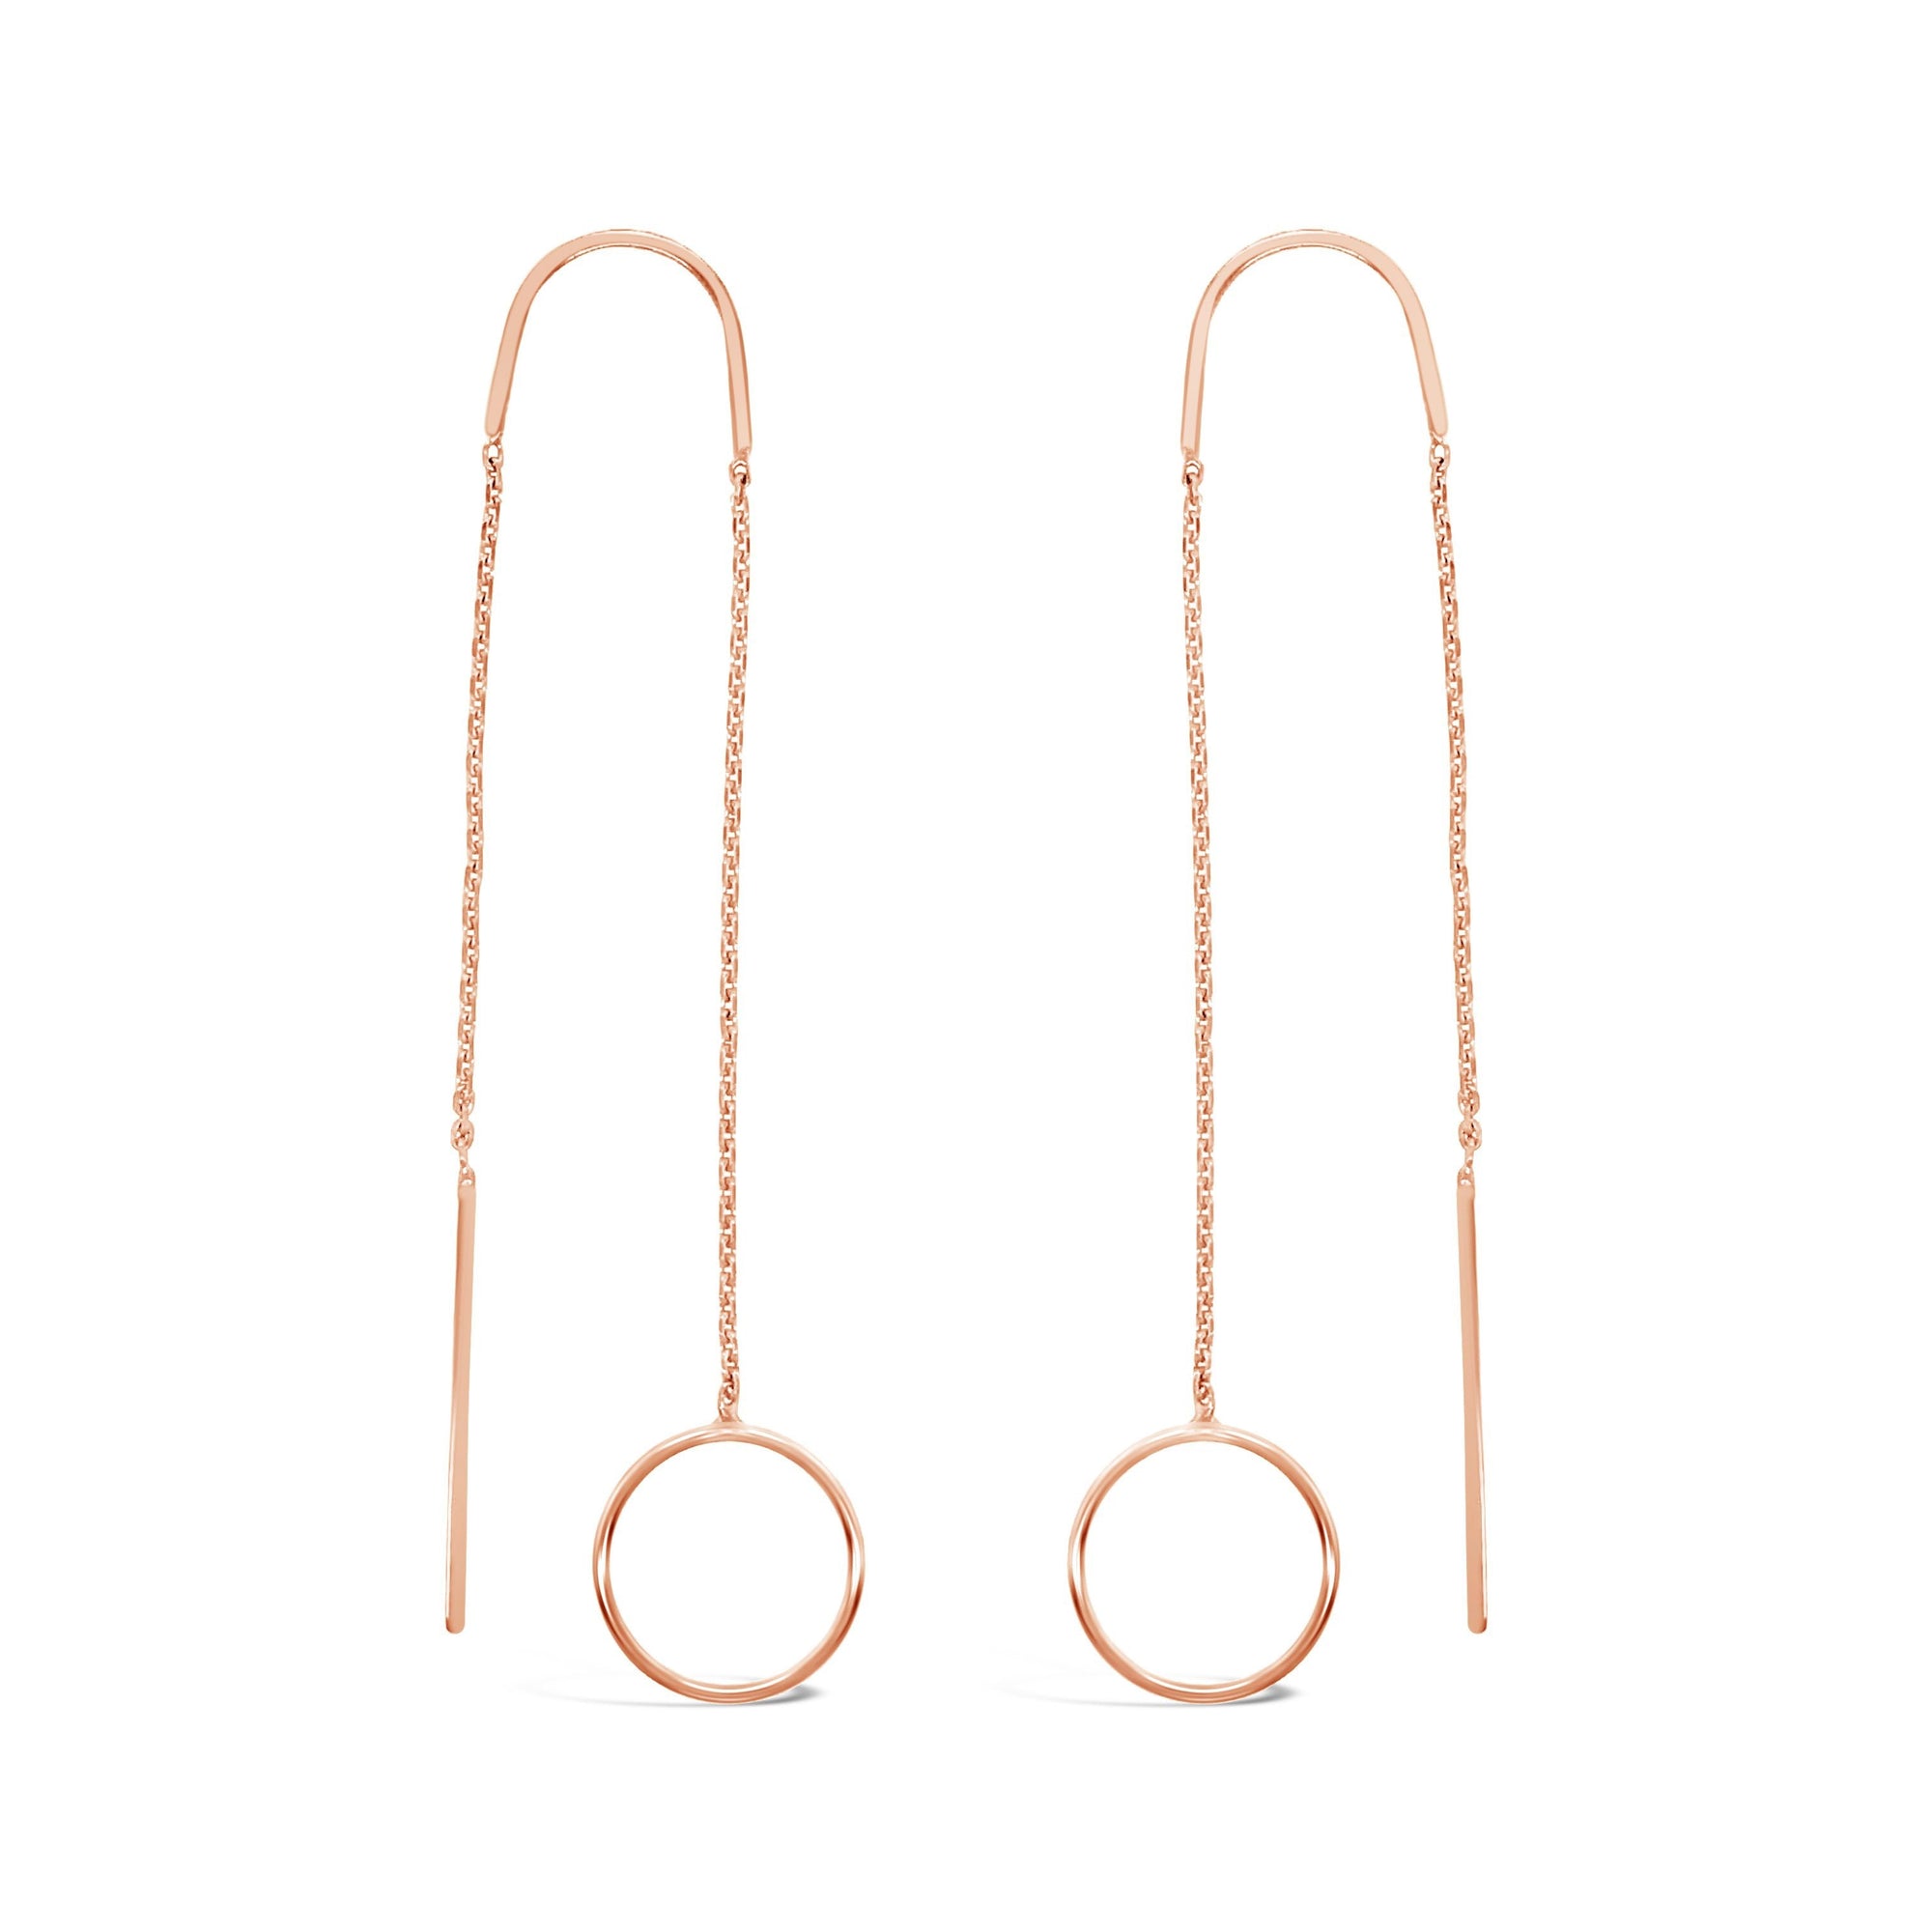 Duo Jewellery Earrings Duo circle thread earrings